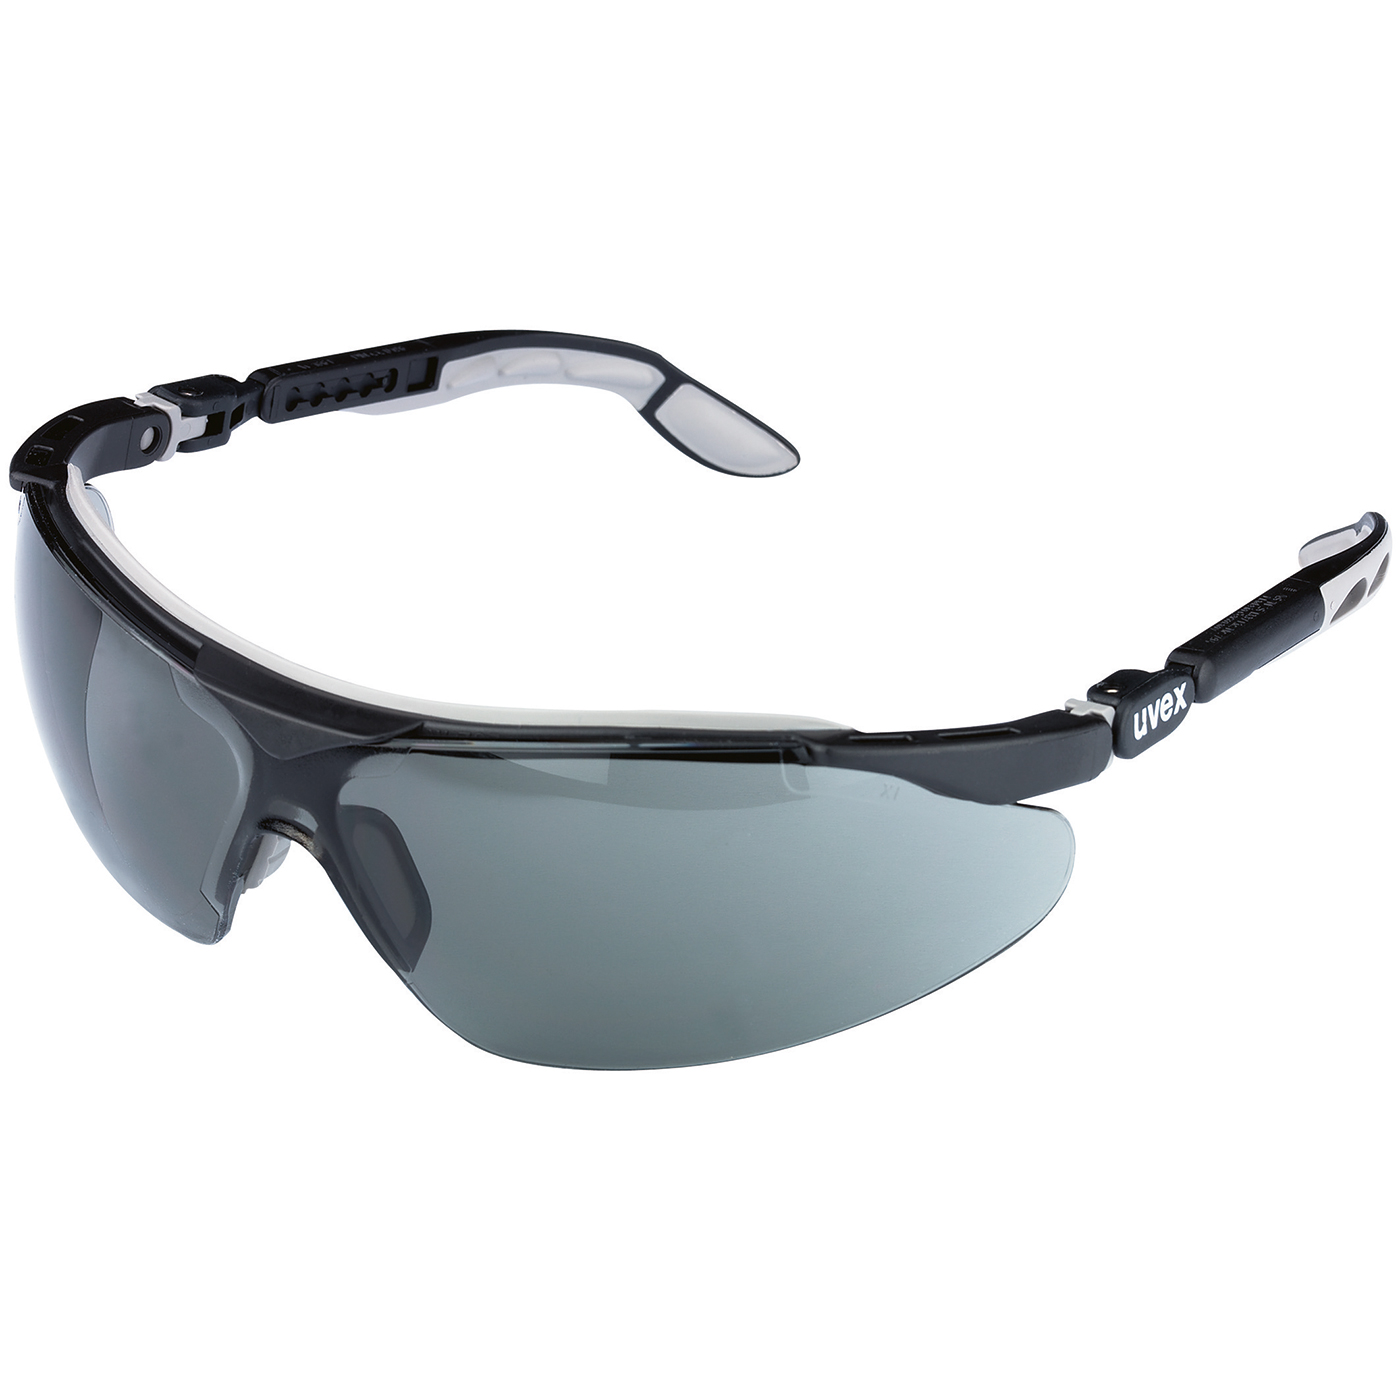 iSpec Comfort Fit Protective Goggles, Lens Grey, Black/Grey - 1 piece